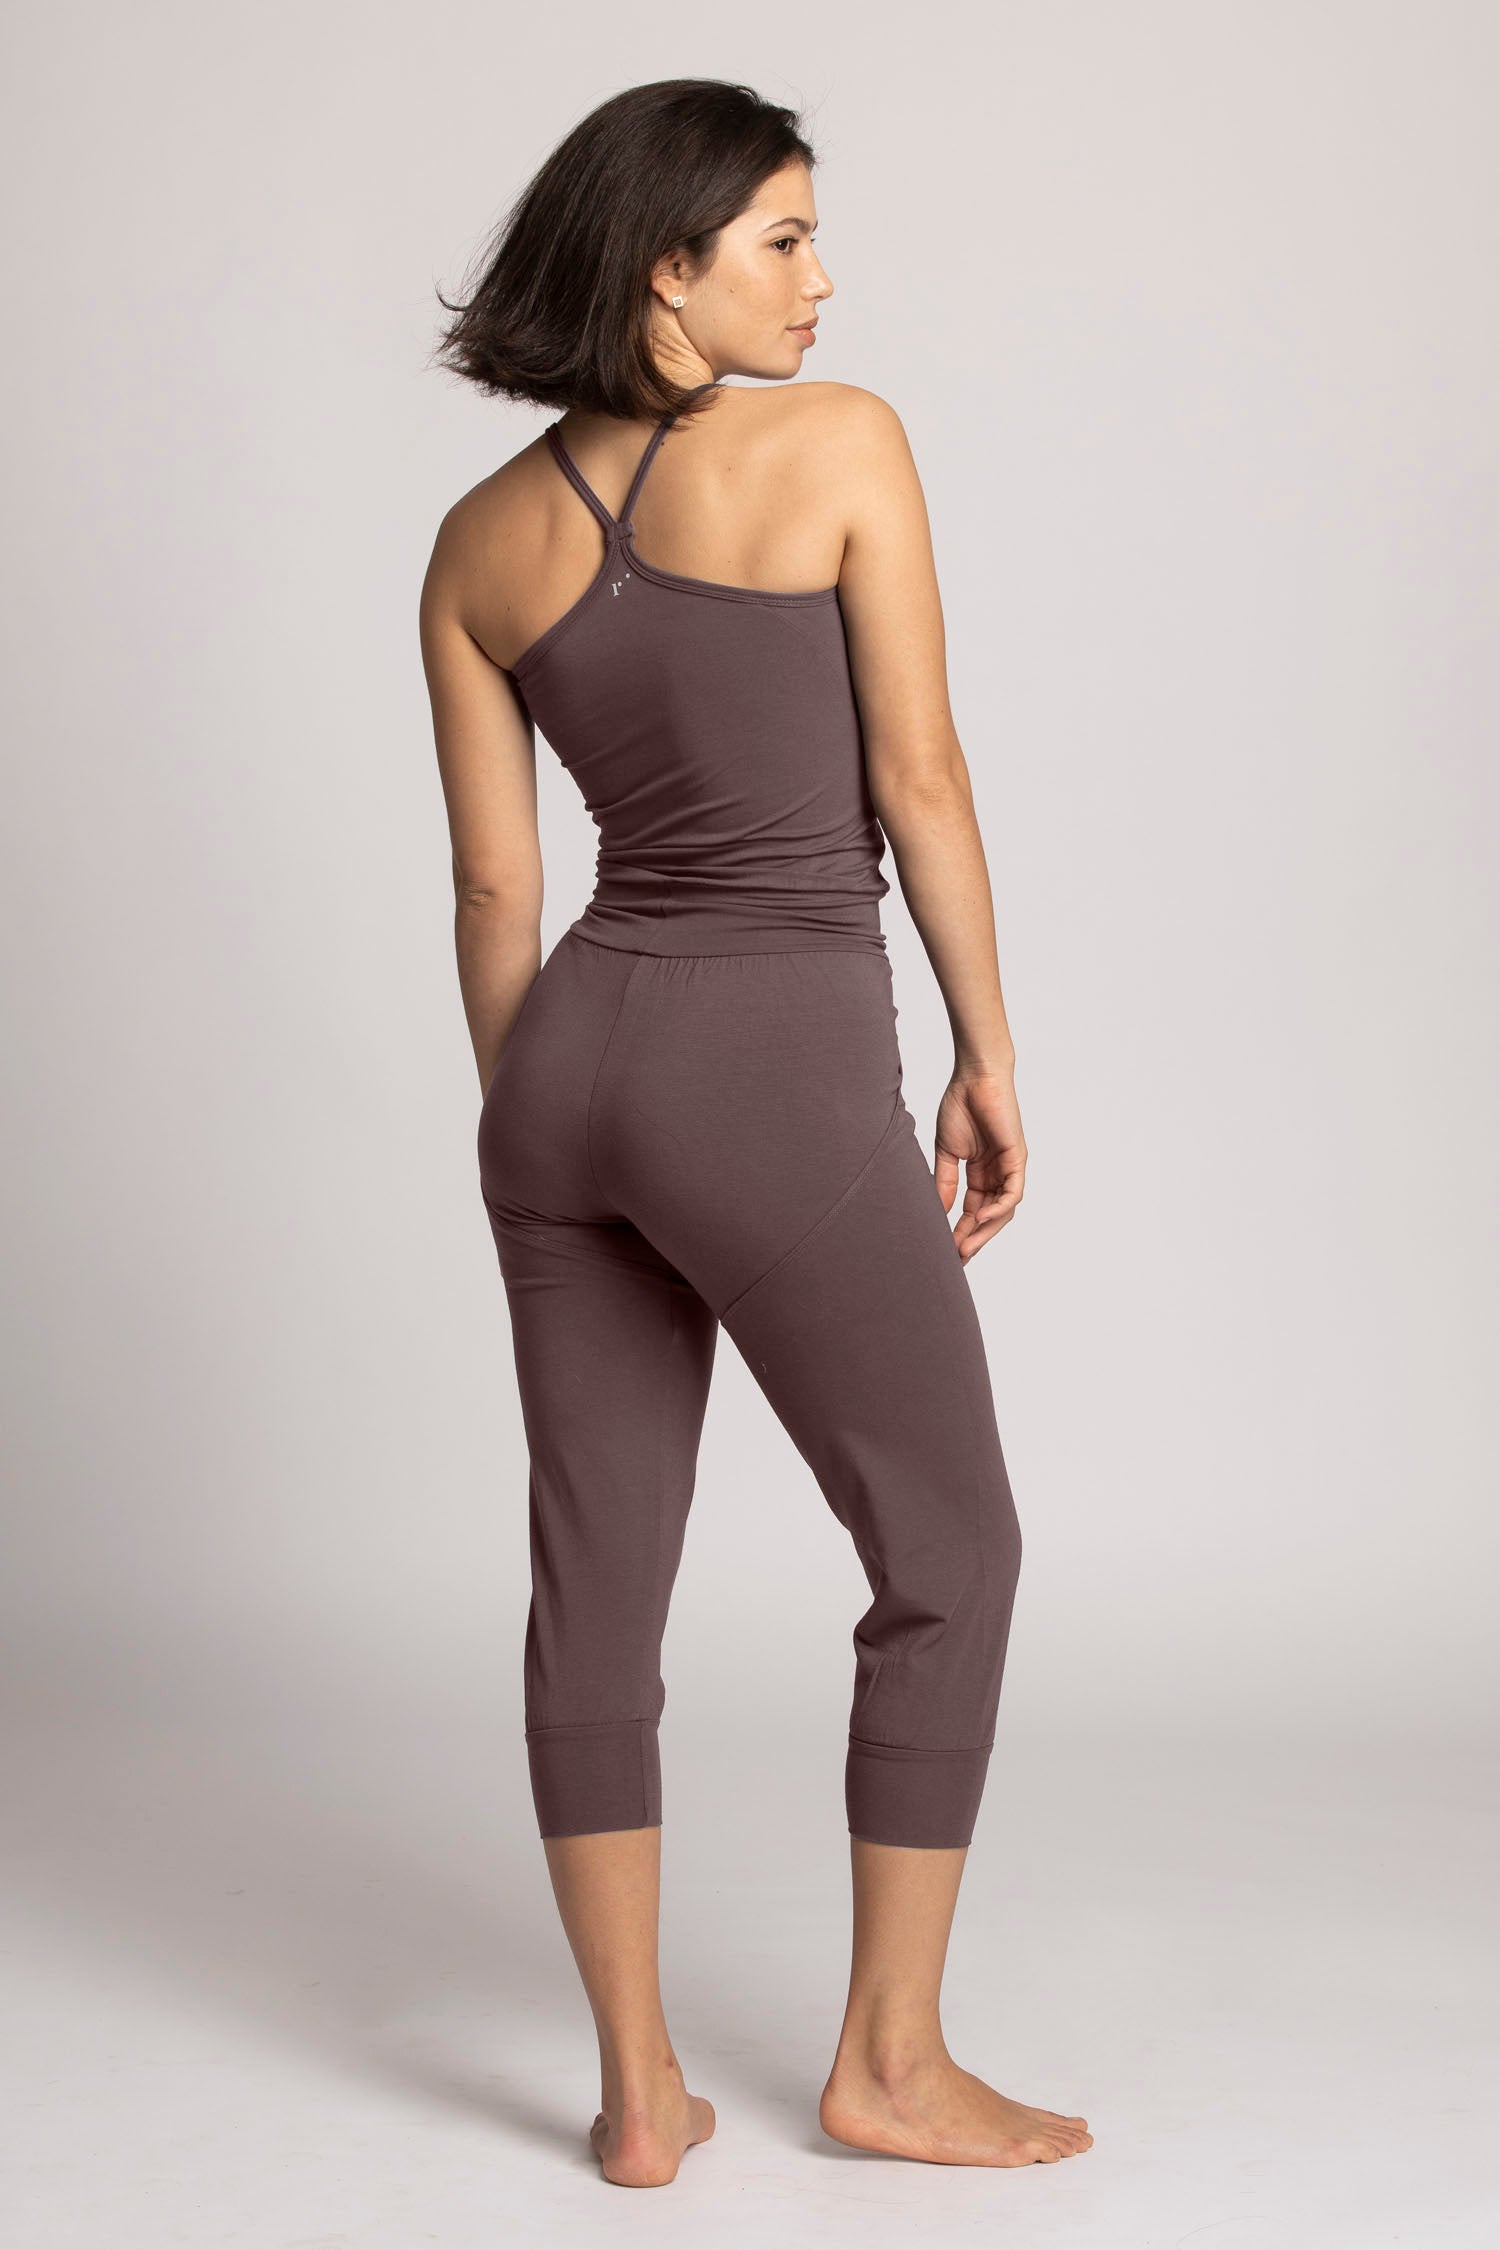 adviicd Yoga Pants For Girls Yoga Jumpsuits For Women Women's